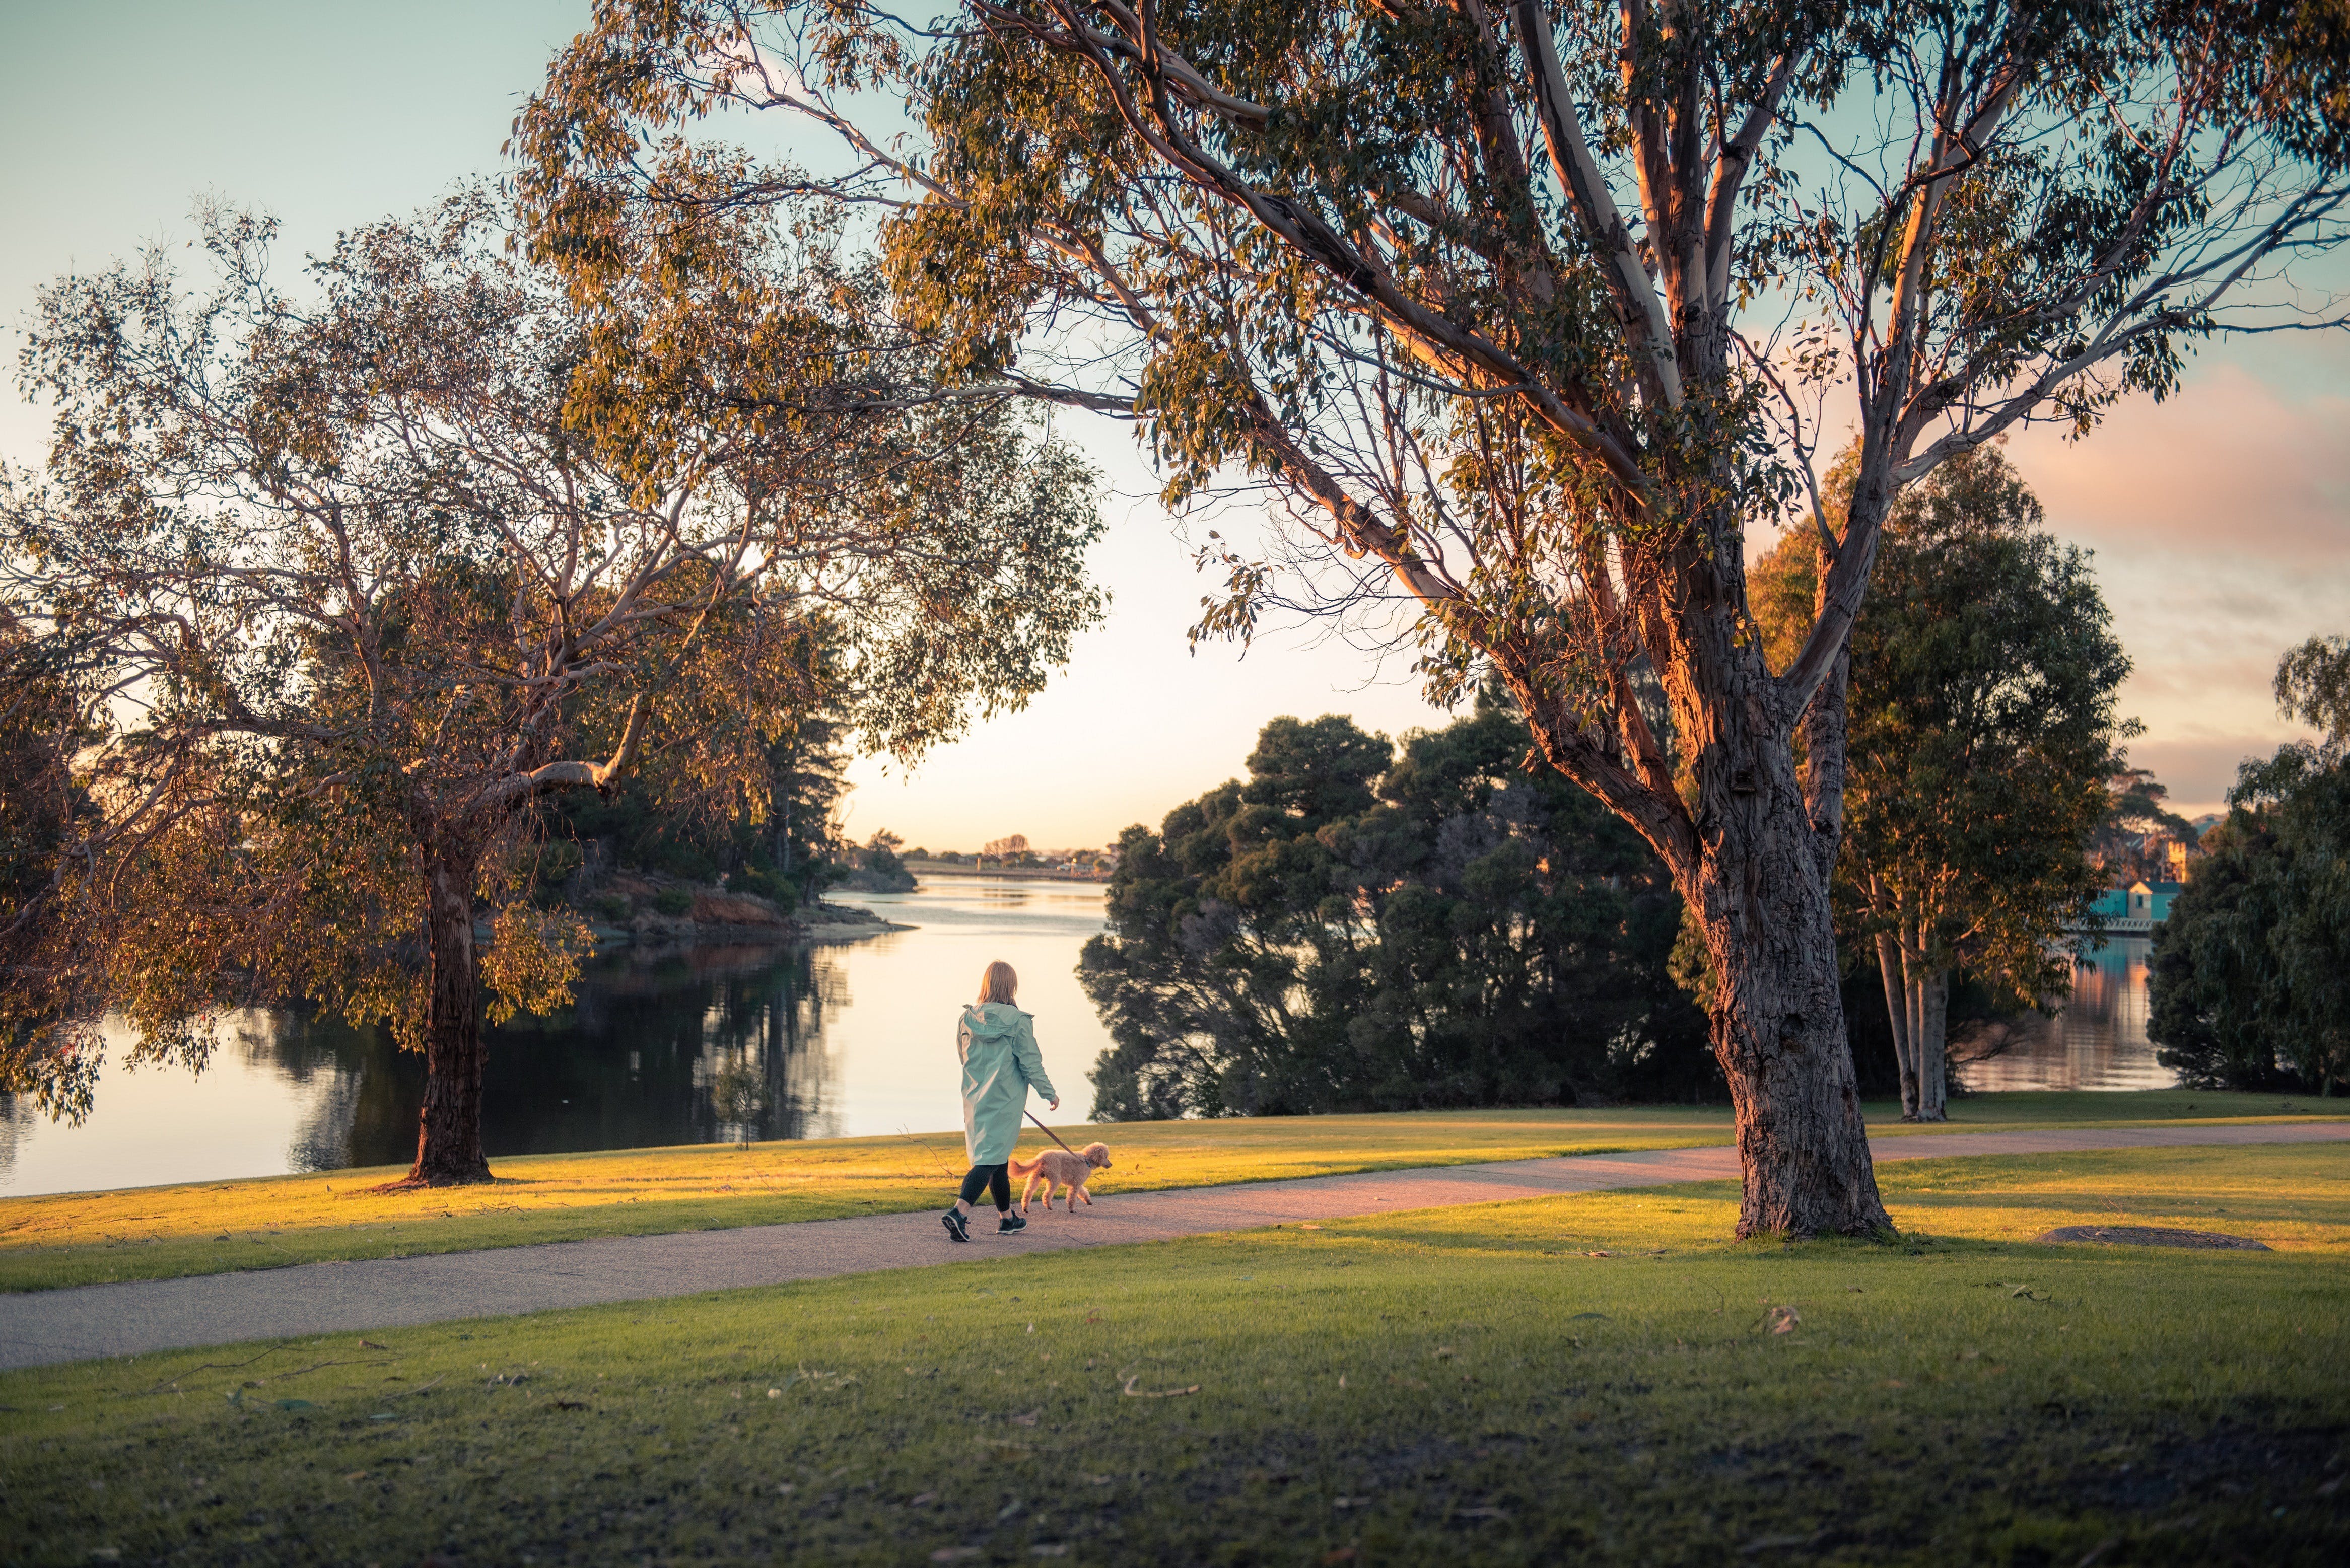 Richard Gutteridge Gardens - Attractions Melbourne